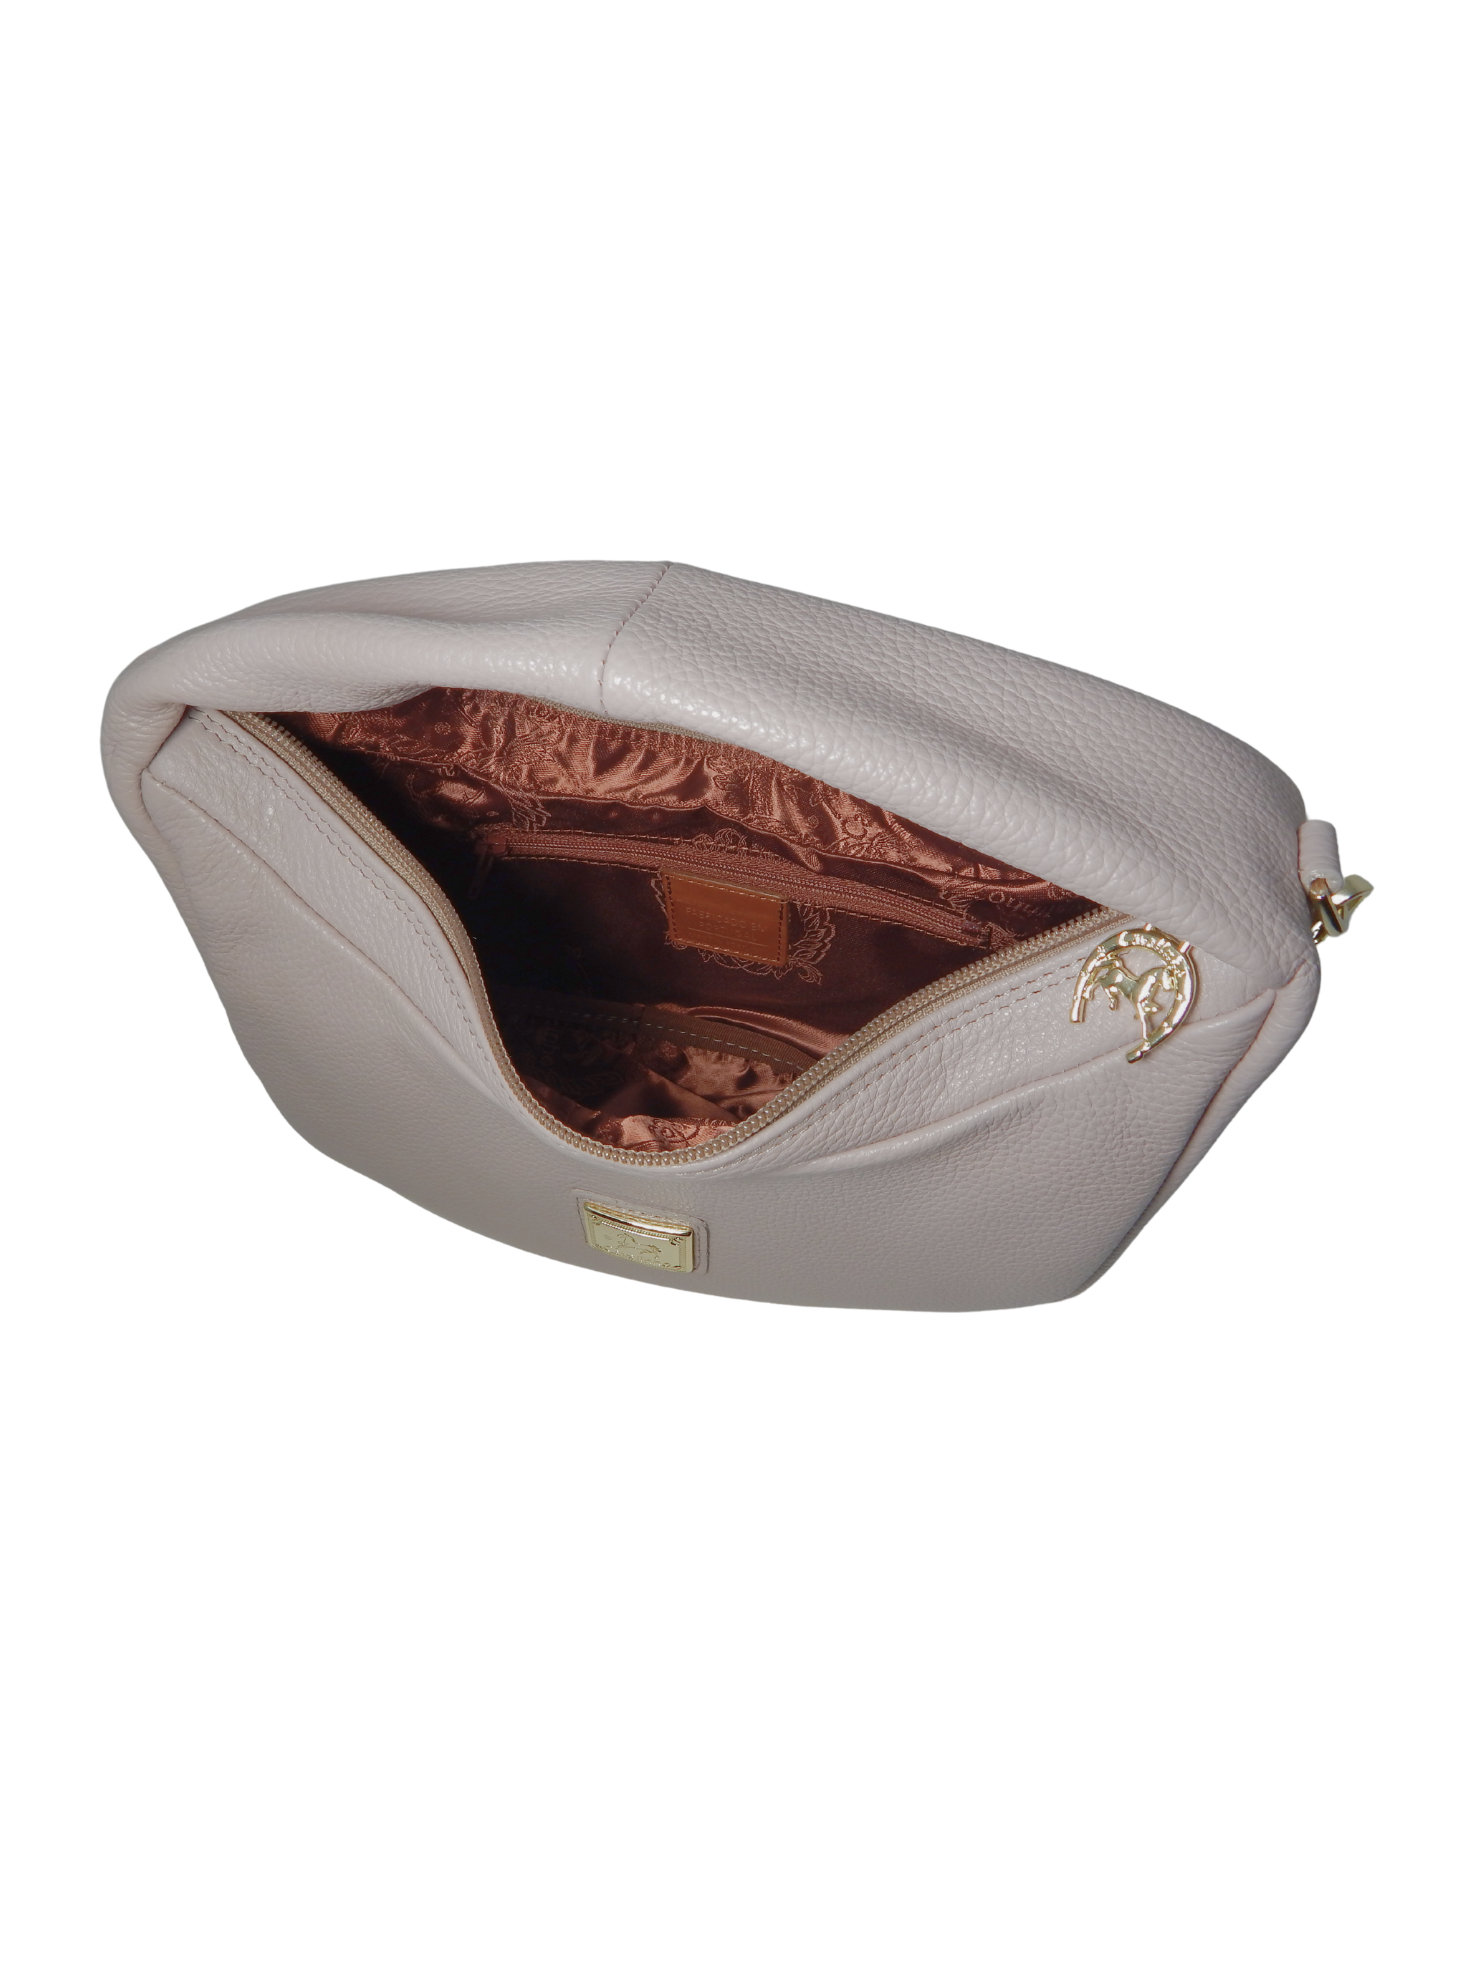 Cavalinho Muse Leather Handbag - SKU 18300523.07.99. | #color_Sand